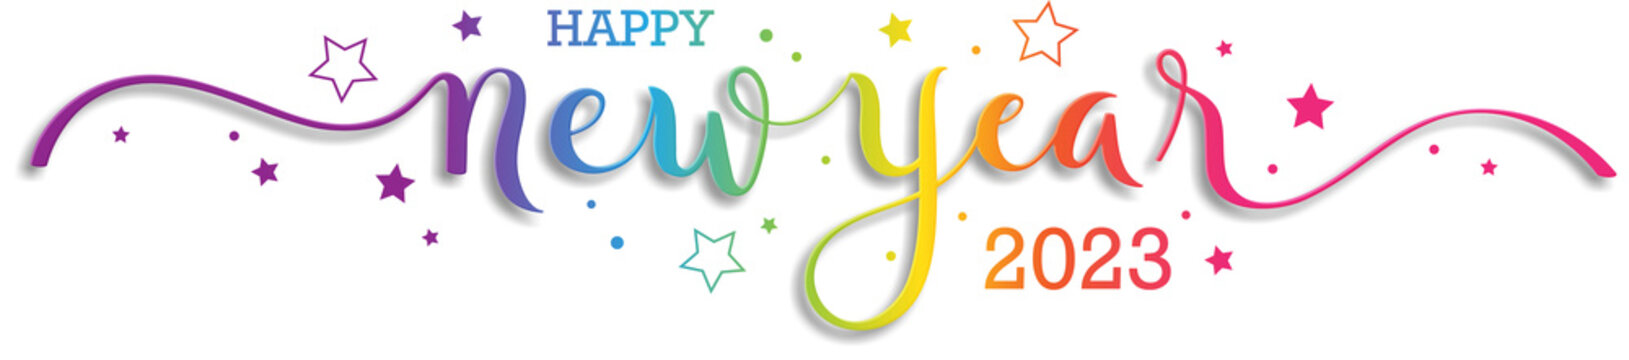 HAPPY NEW YEAR 2023 rainbow brush calligraphy banner with stars